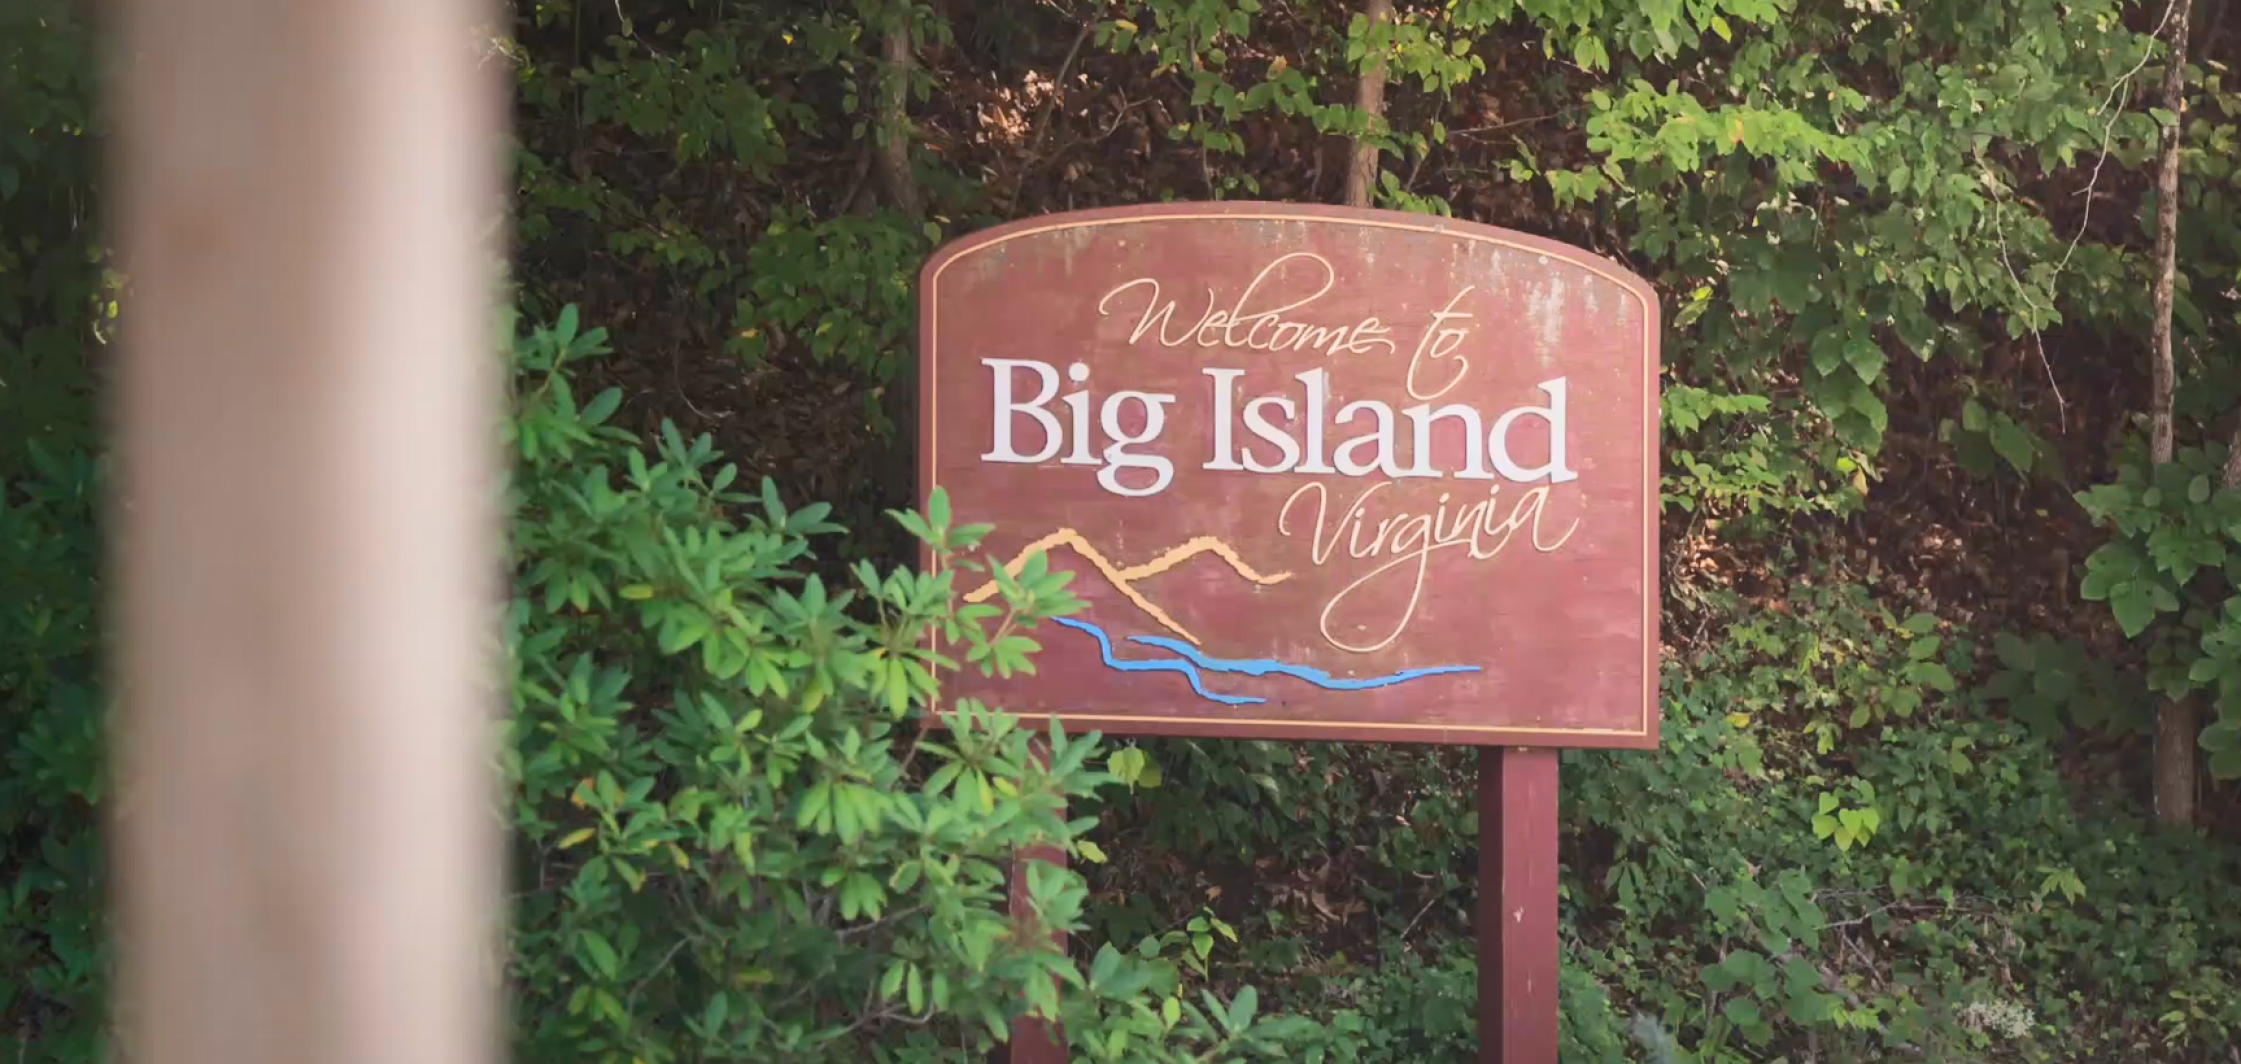 Big Island VA welcome sign